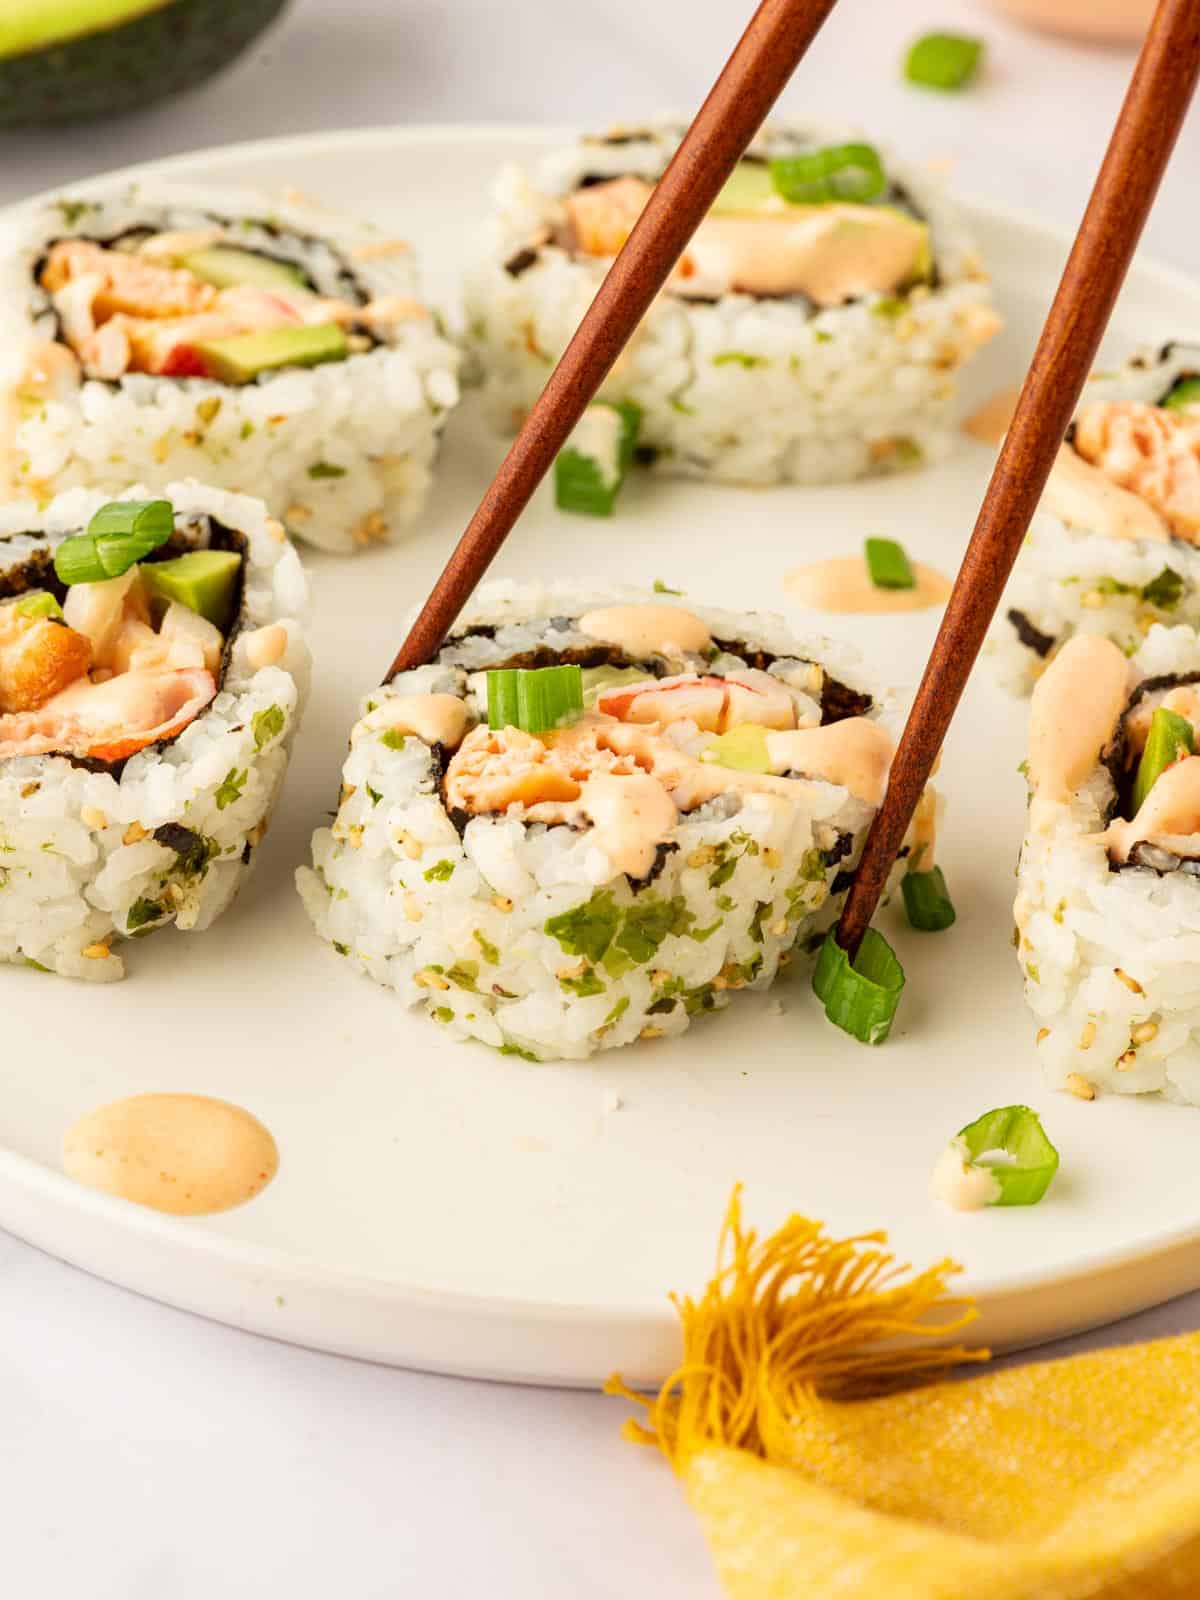 Chopsticks pick of a piece of sushi.